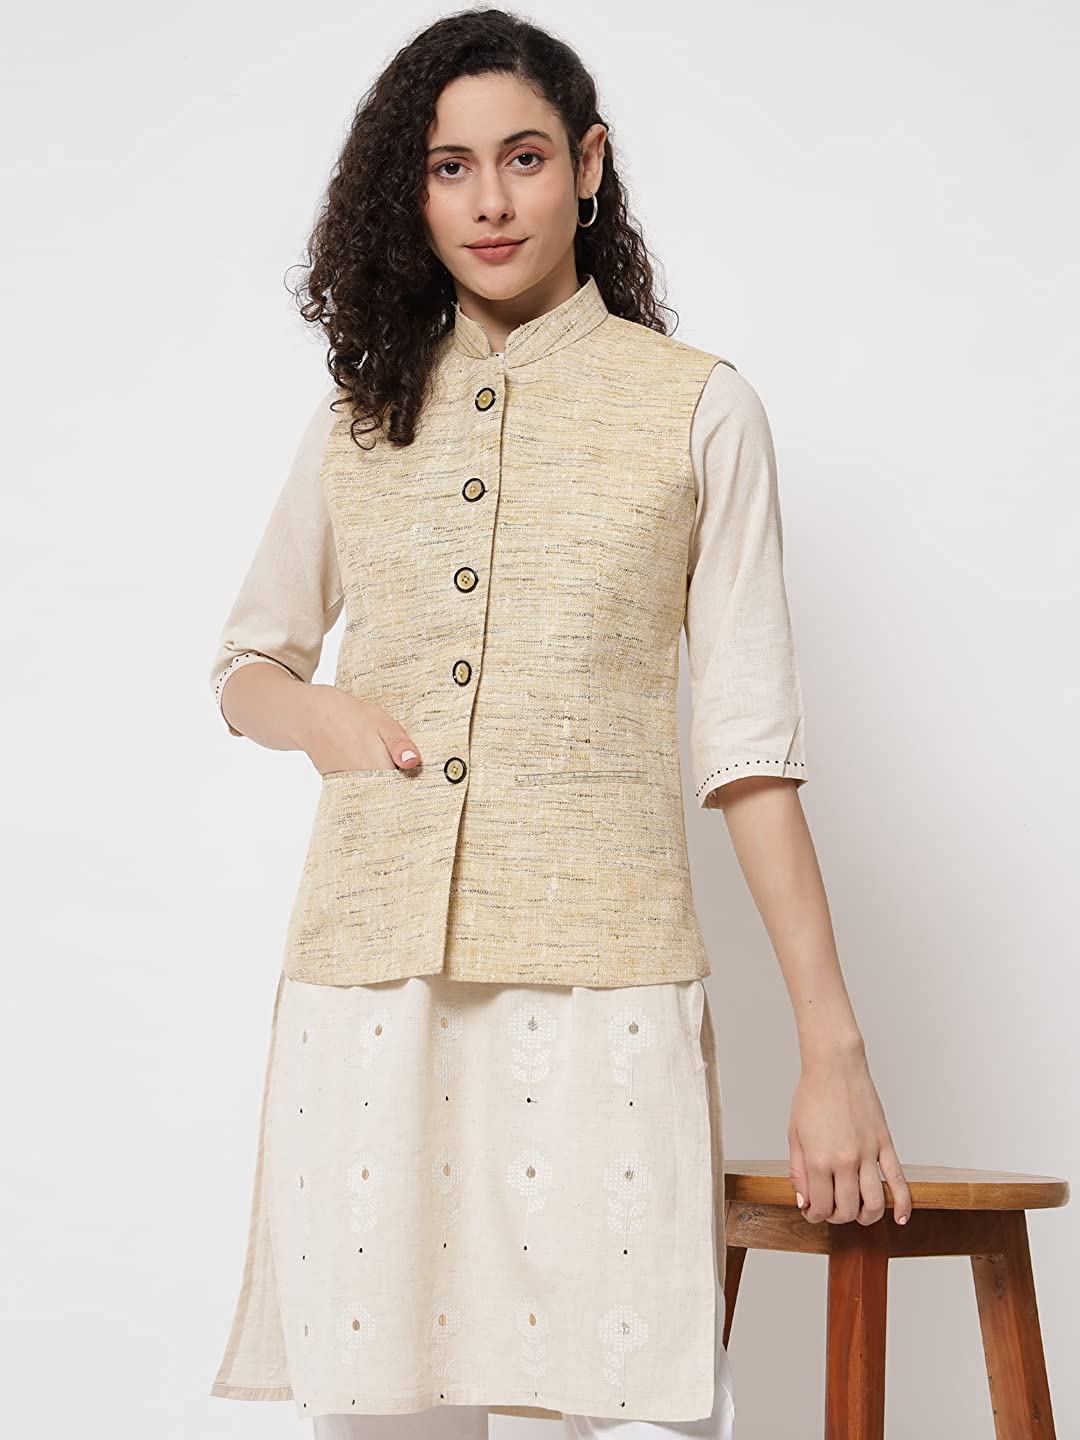 Vastraa Fusion Women's Handloom Khadi Cotton Nehru Jacket